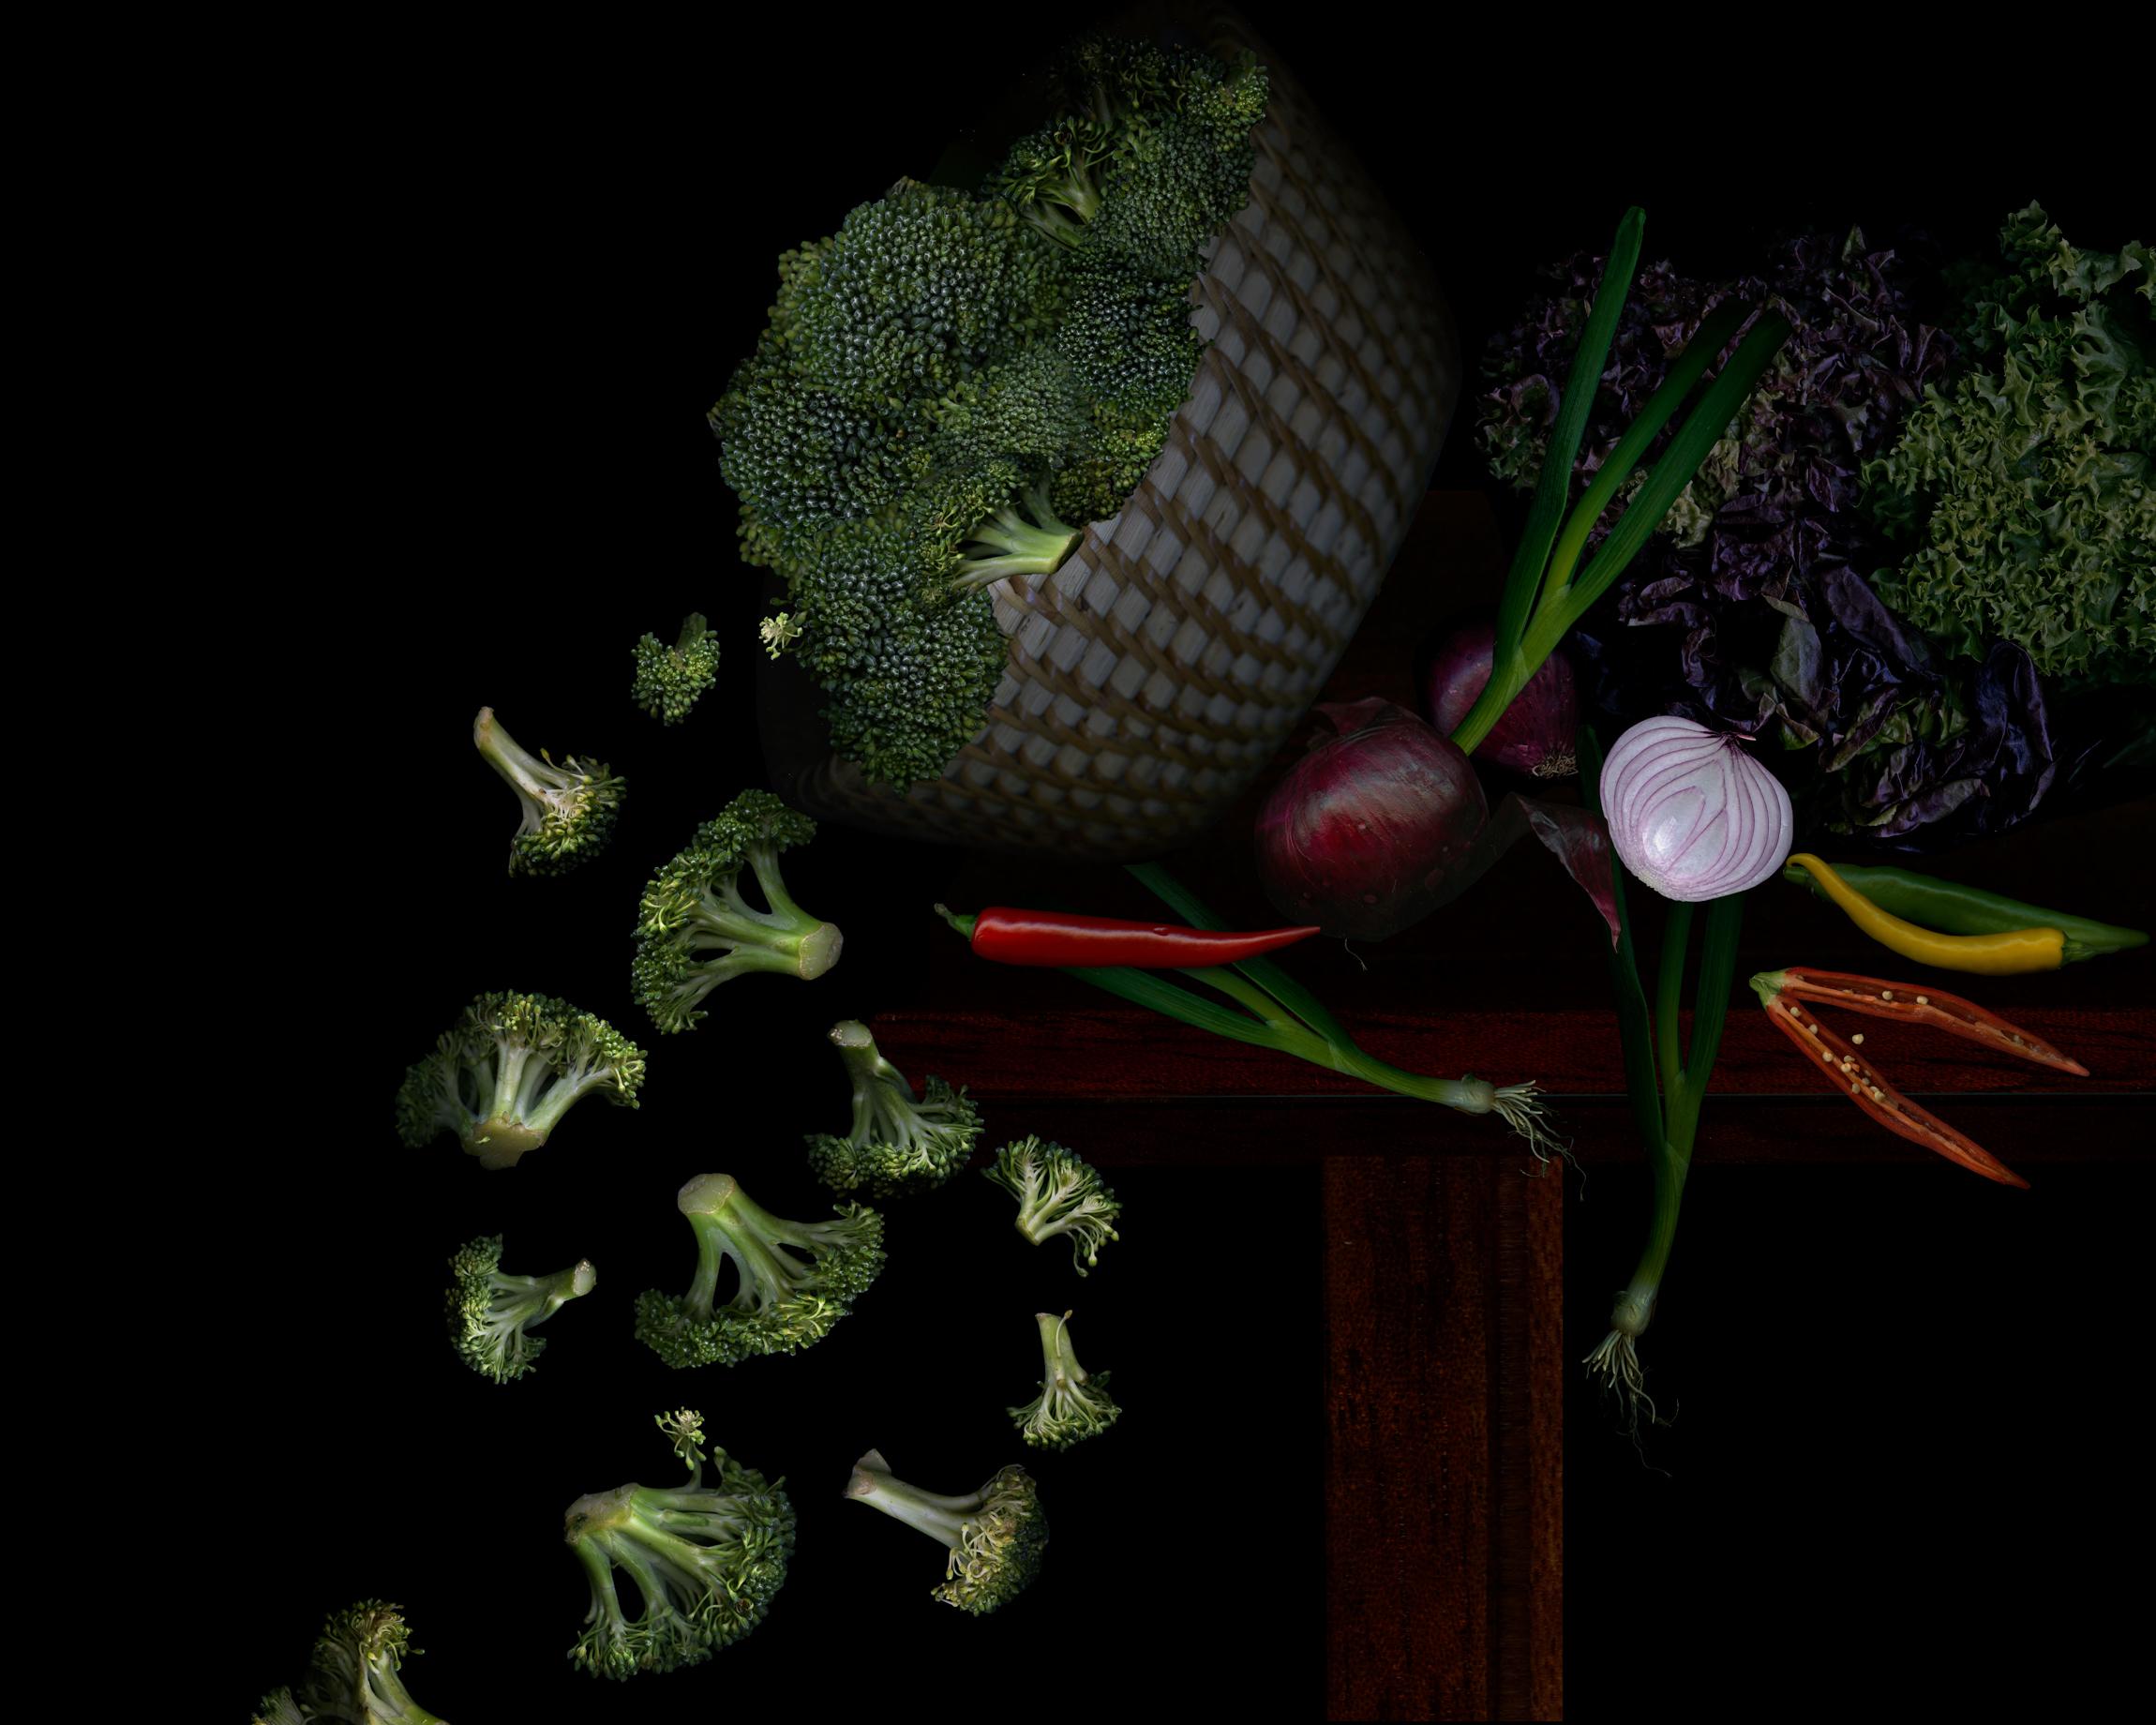 Zoltan Gerliczki Still-Life Photograph - Vegetables from my garden #1 Digital Collage Color Photograph